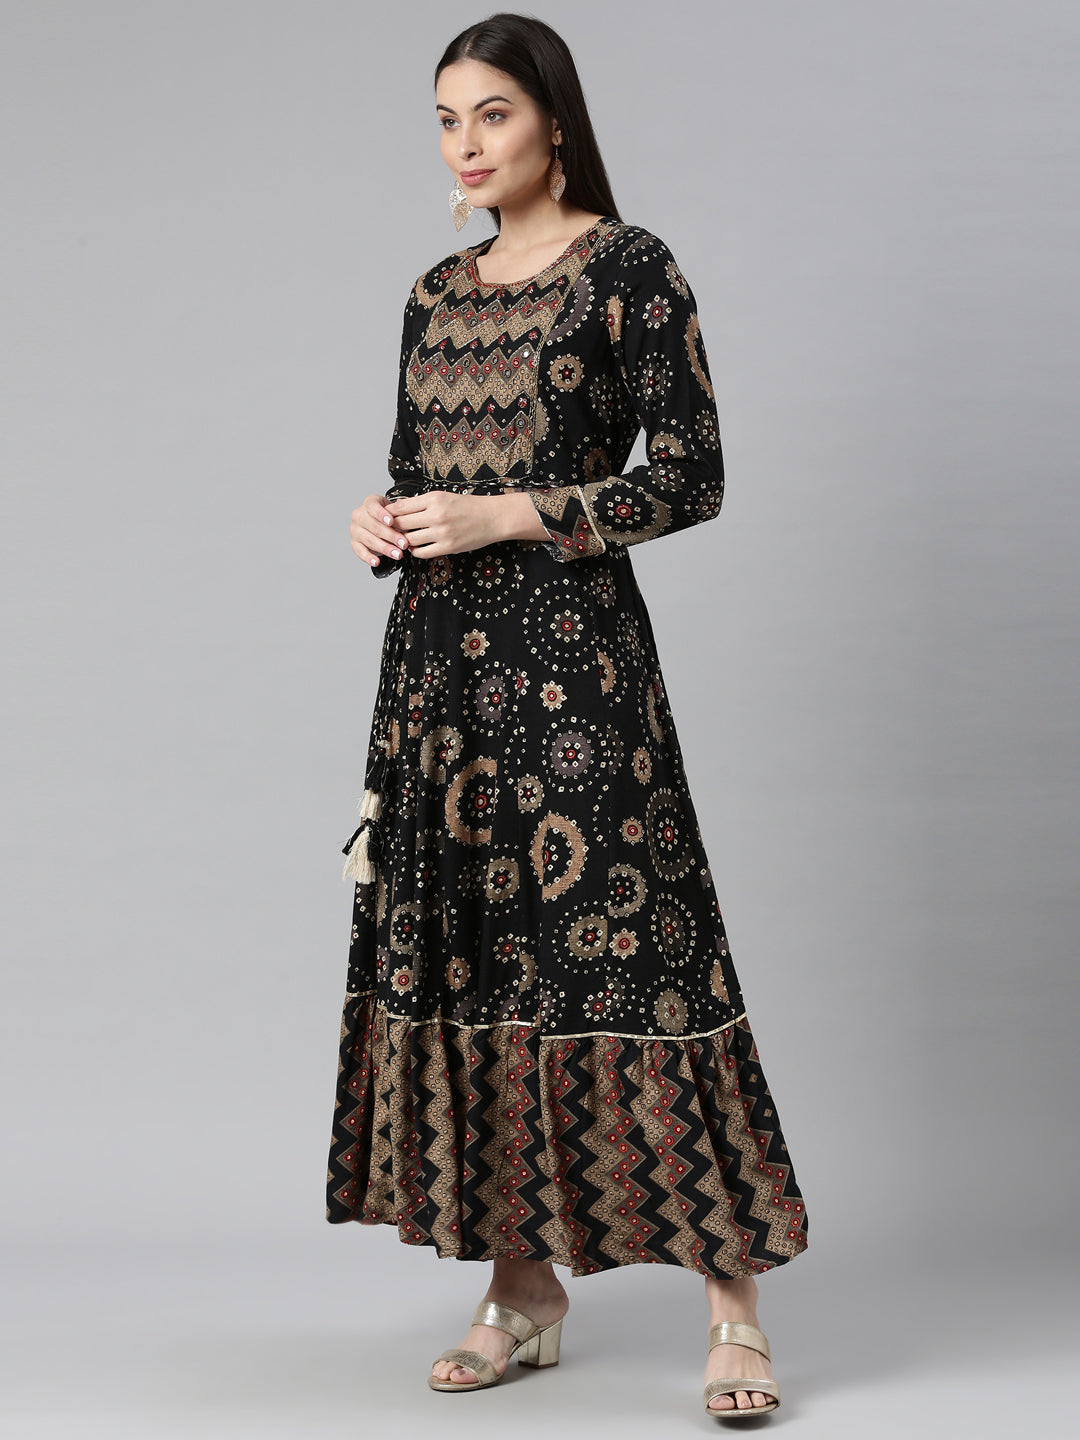 Neeru's Black Color Rayon Fabric Floral Kurta